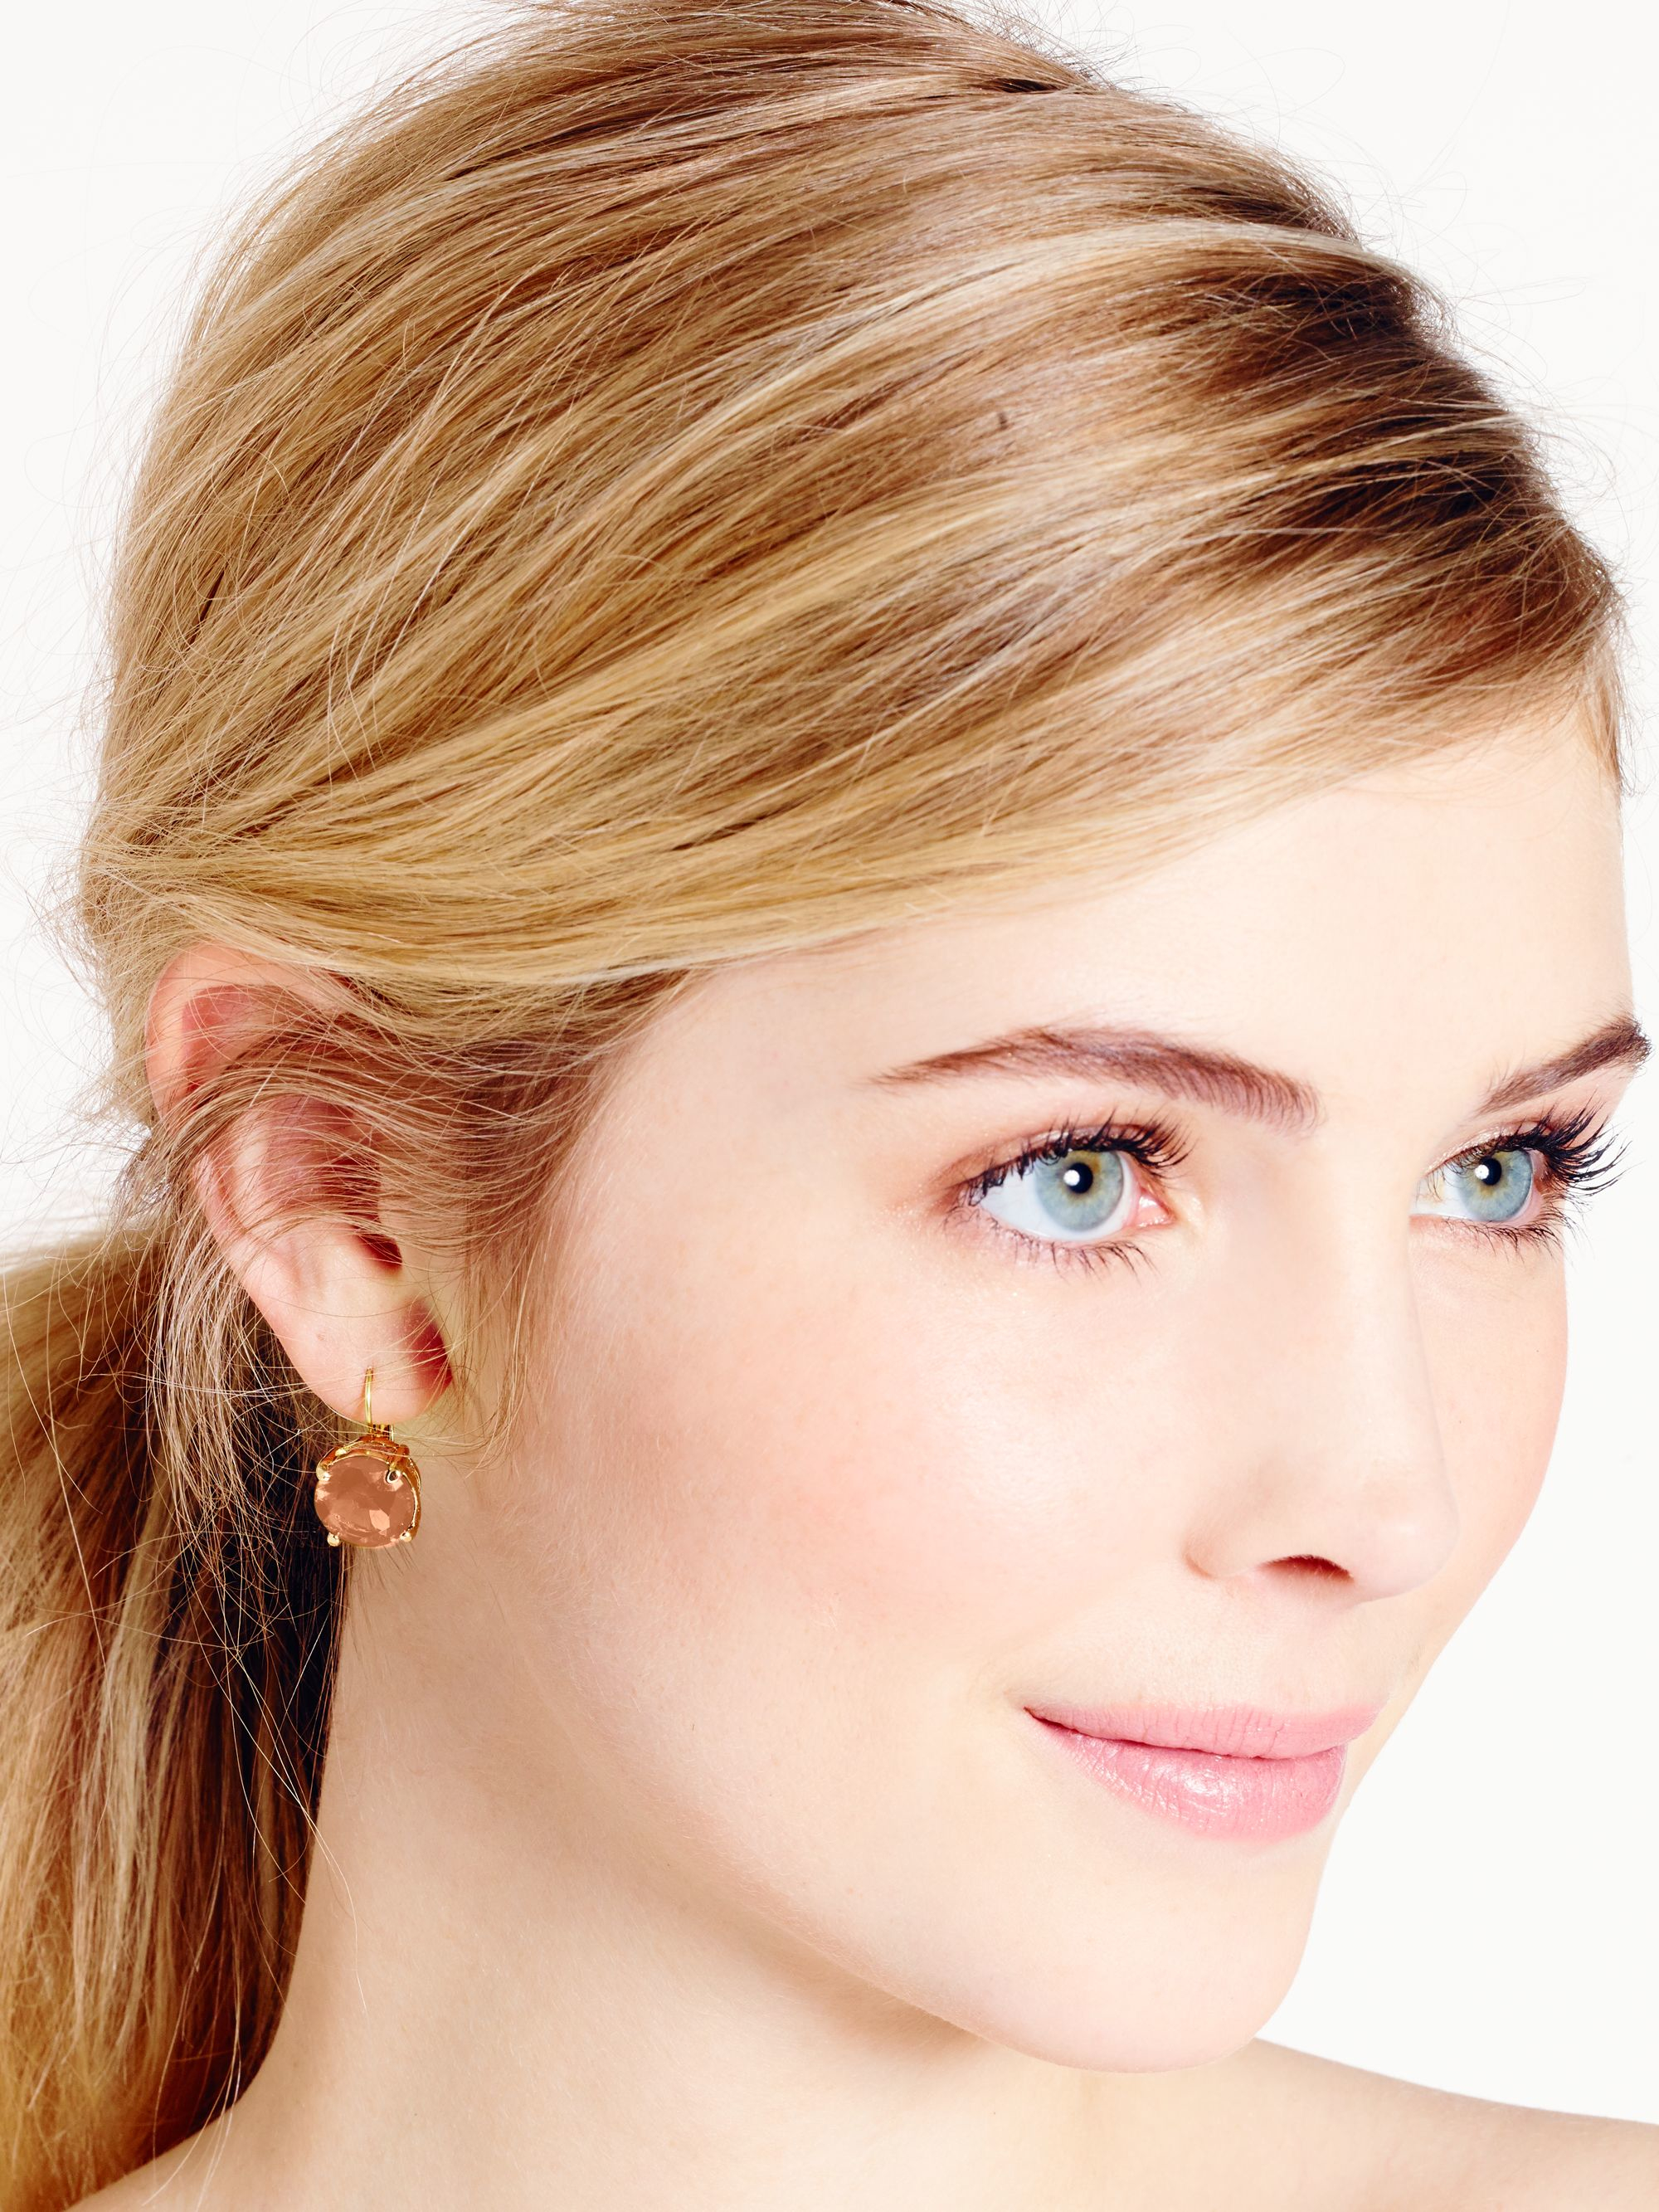 kate spade leverback earrings OFF 61% |Newest